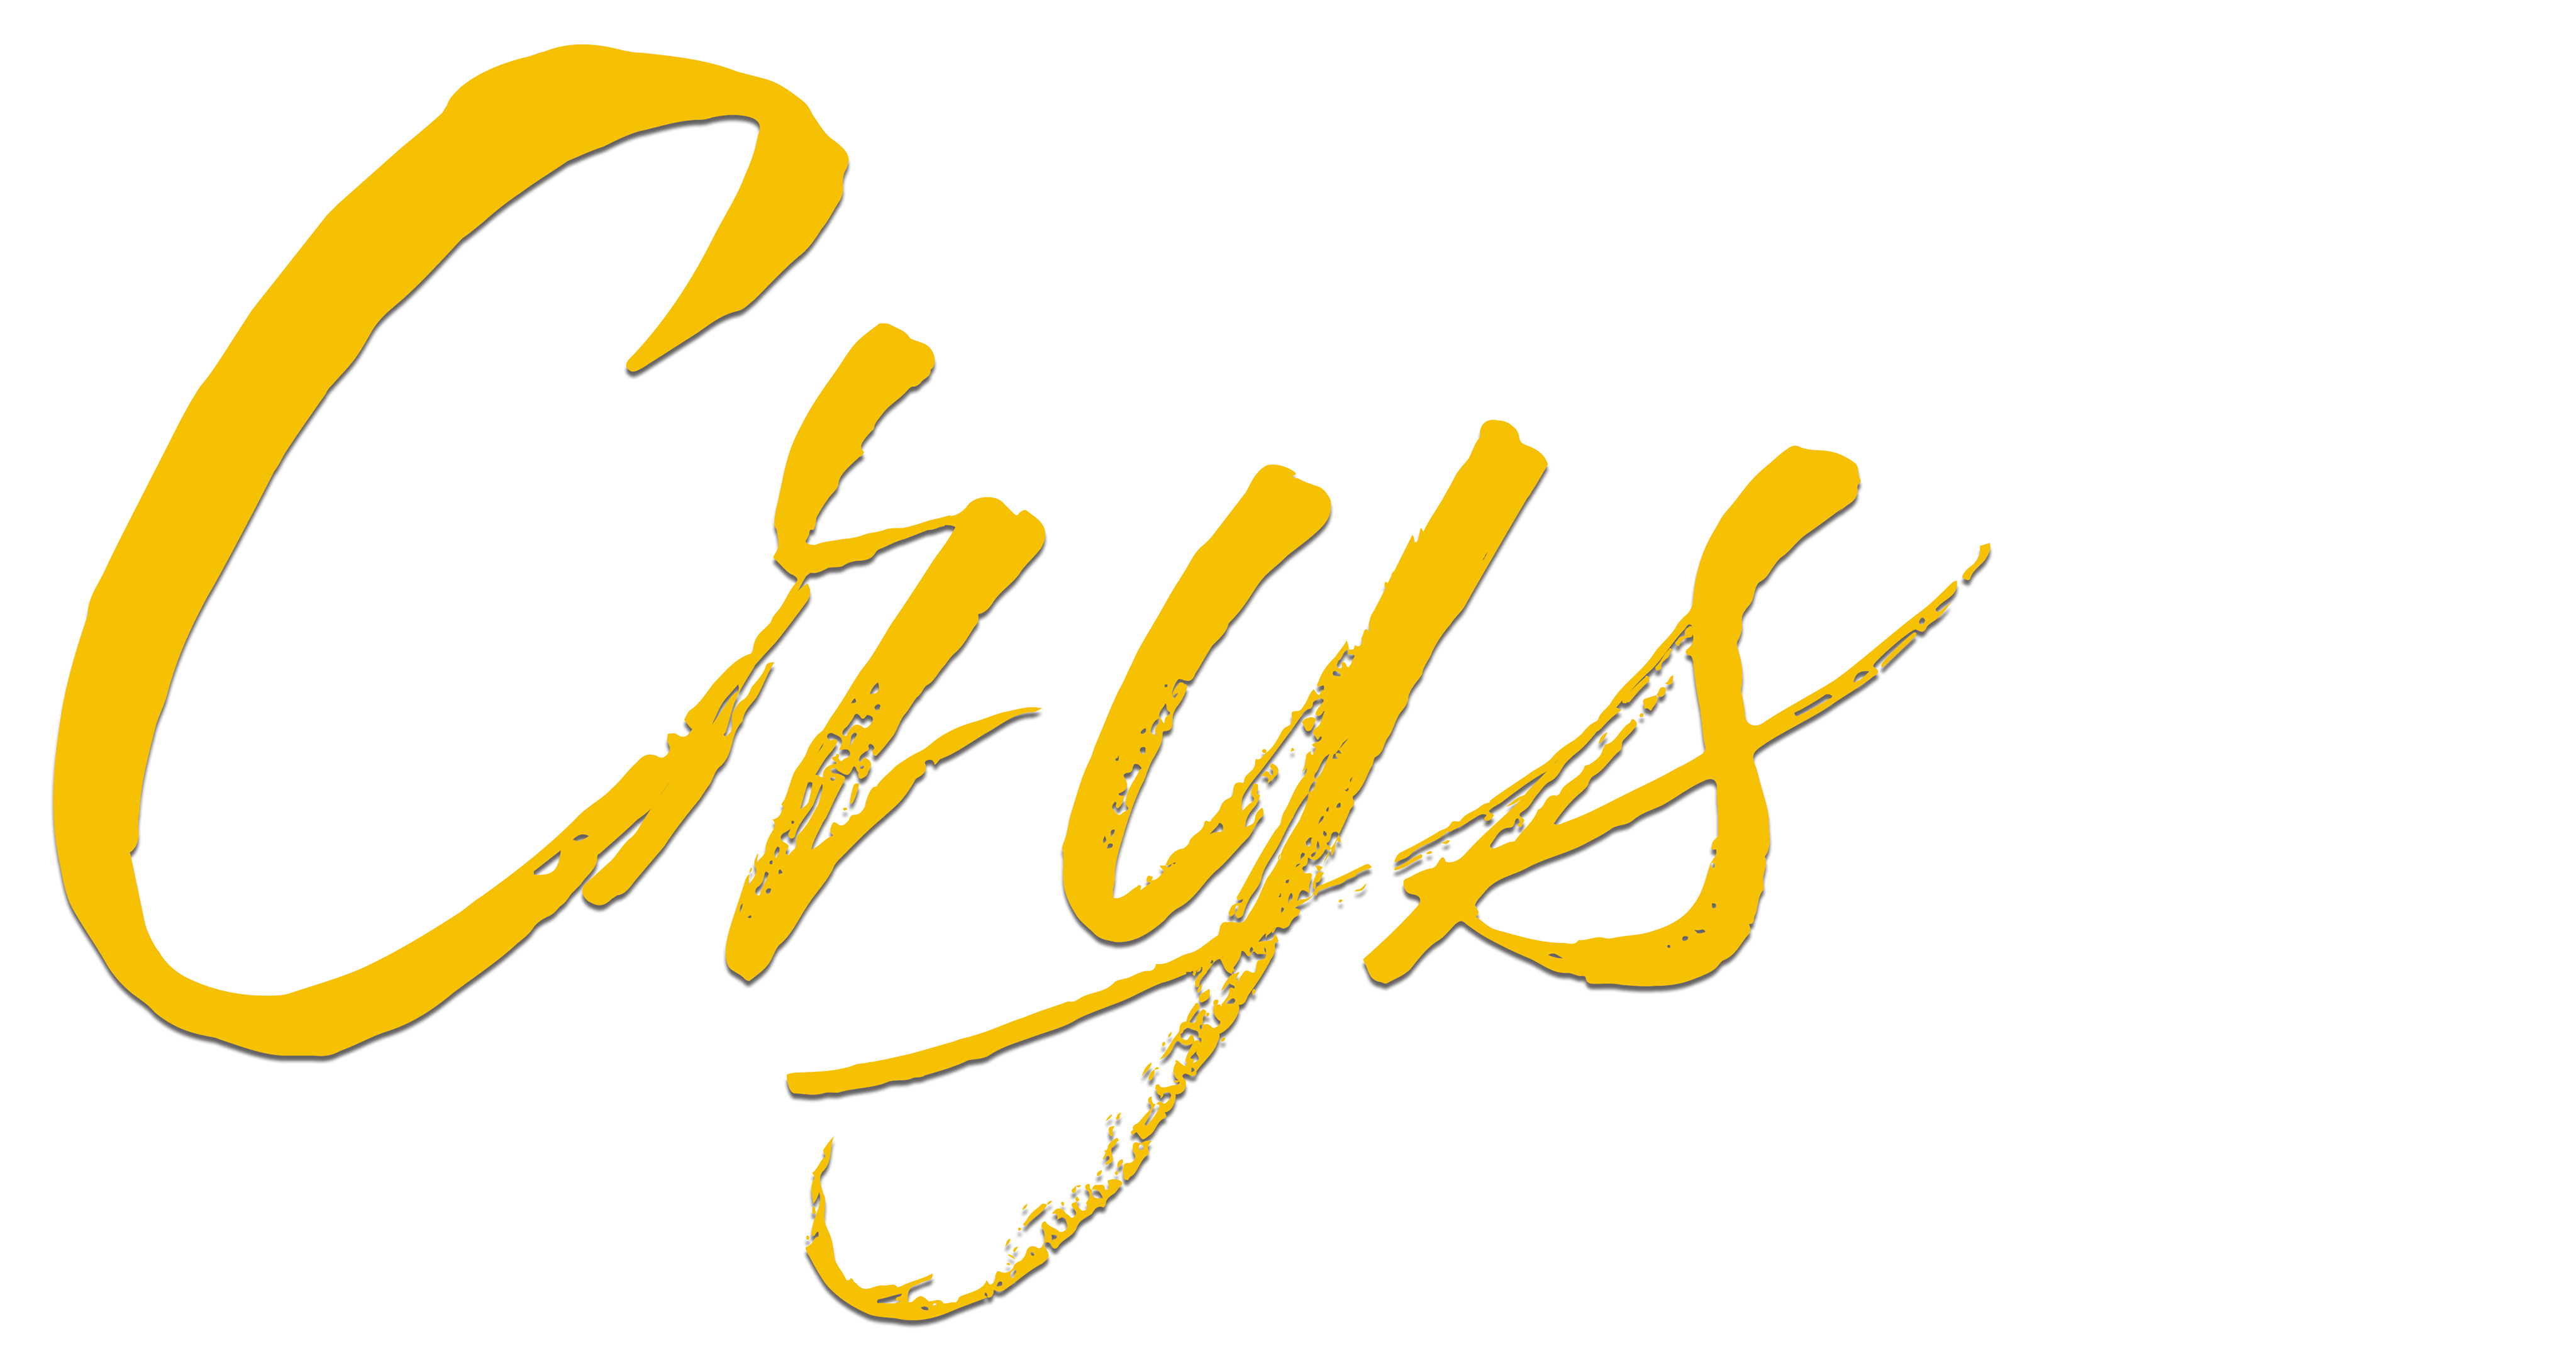 crystina kennedy logo